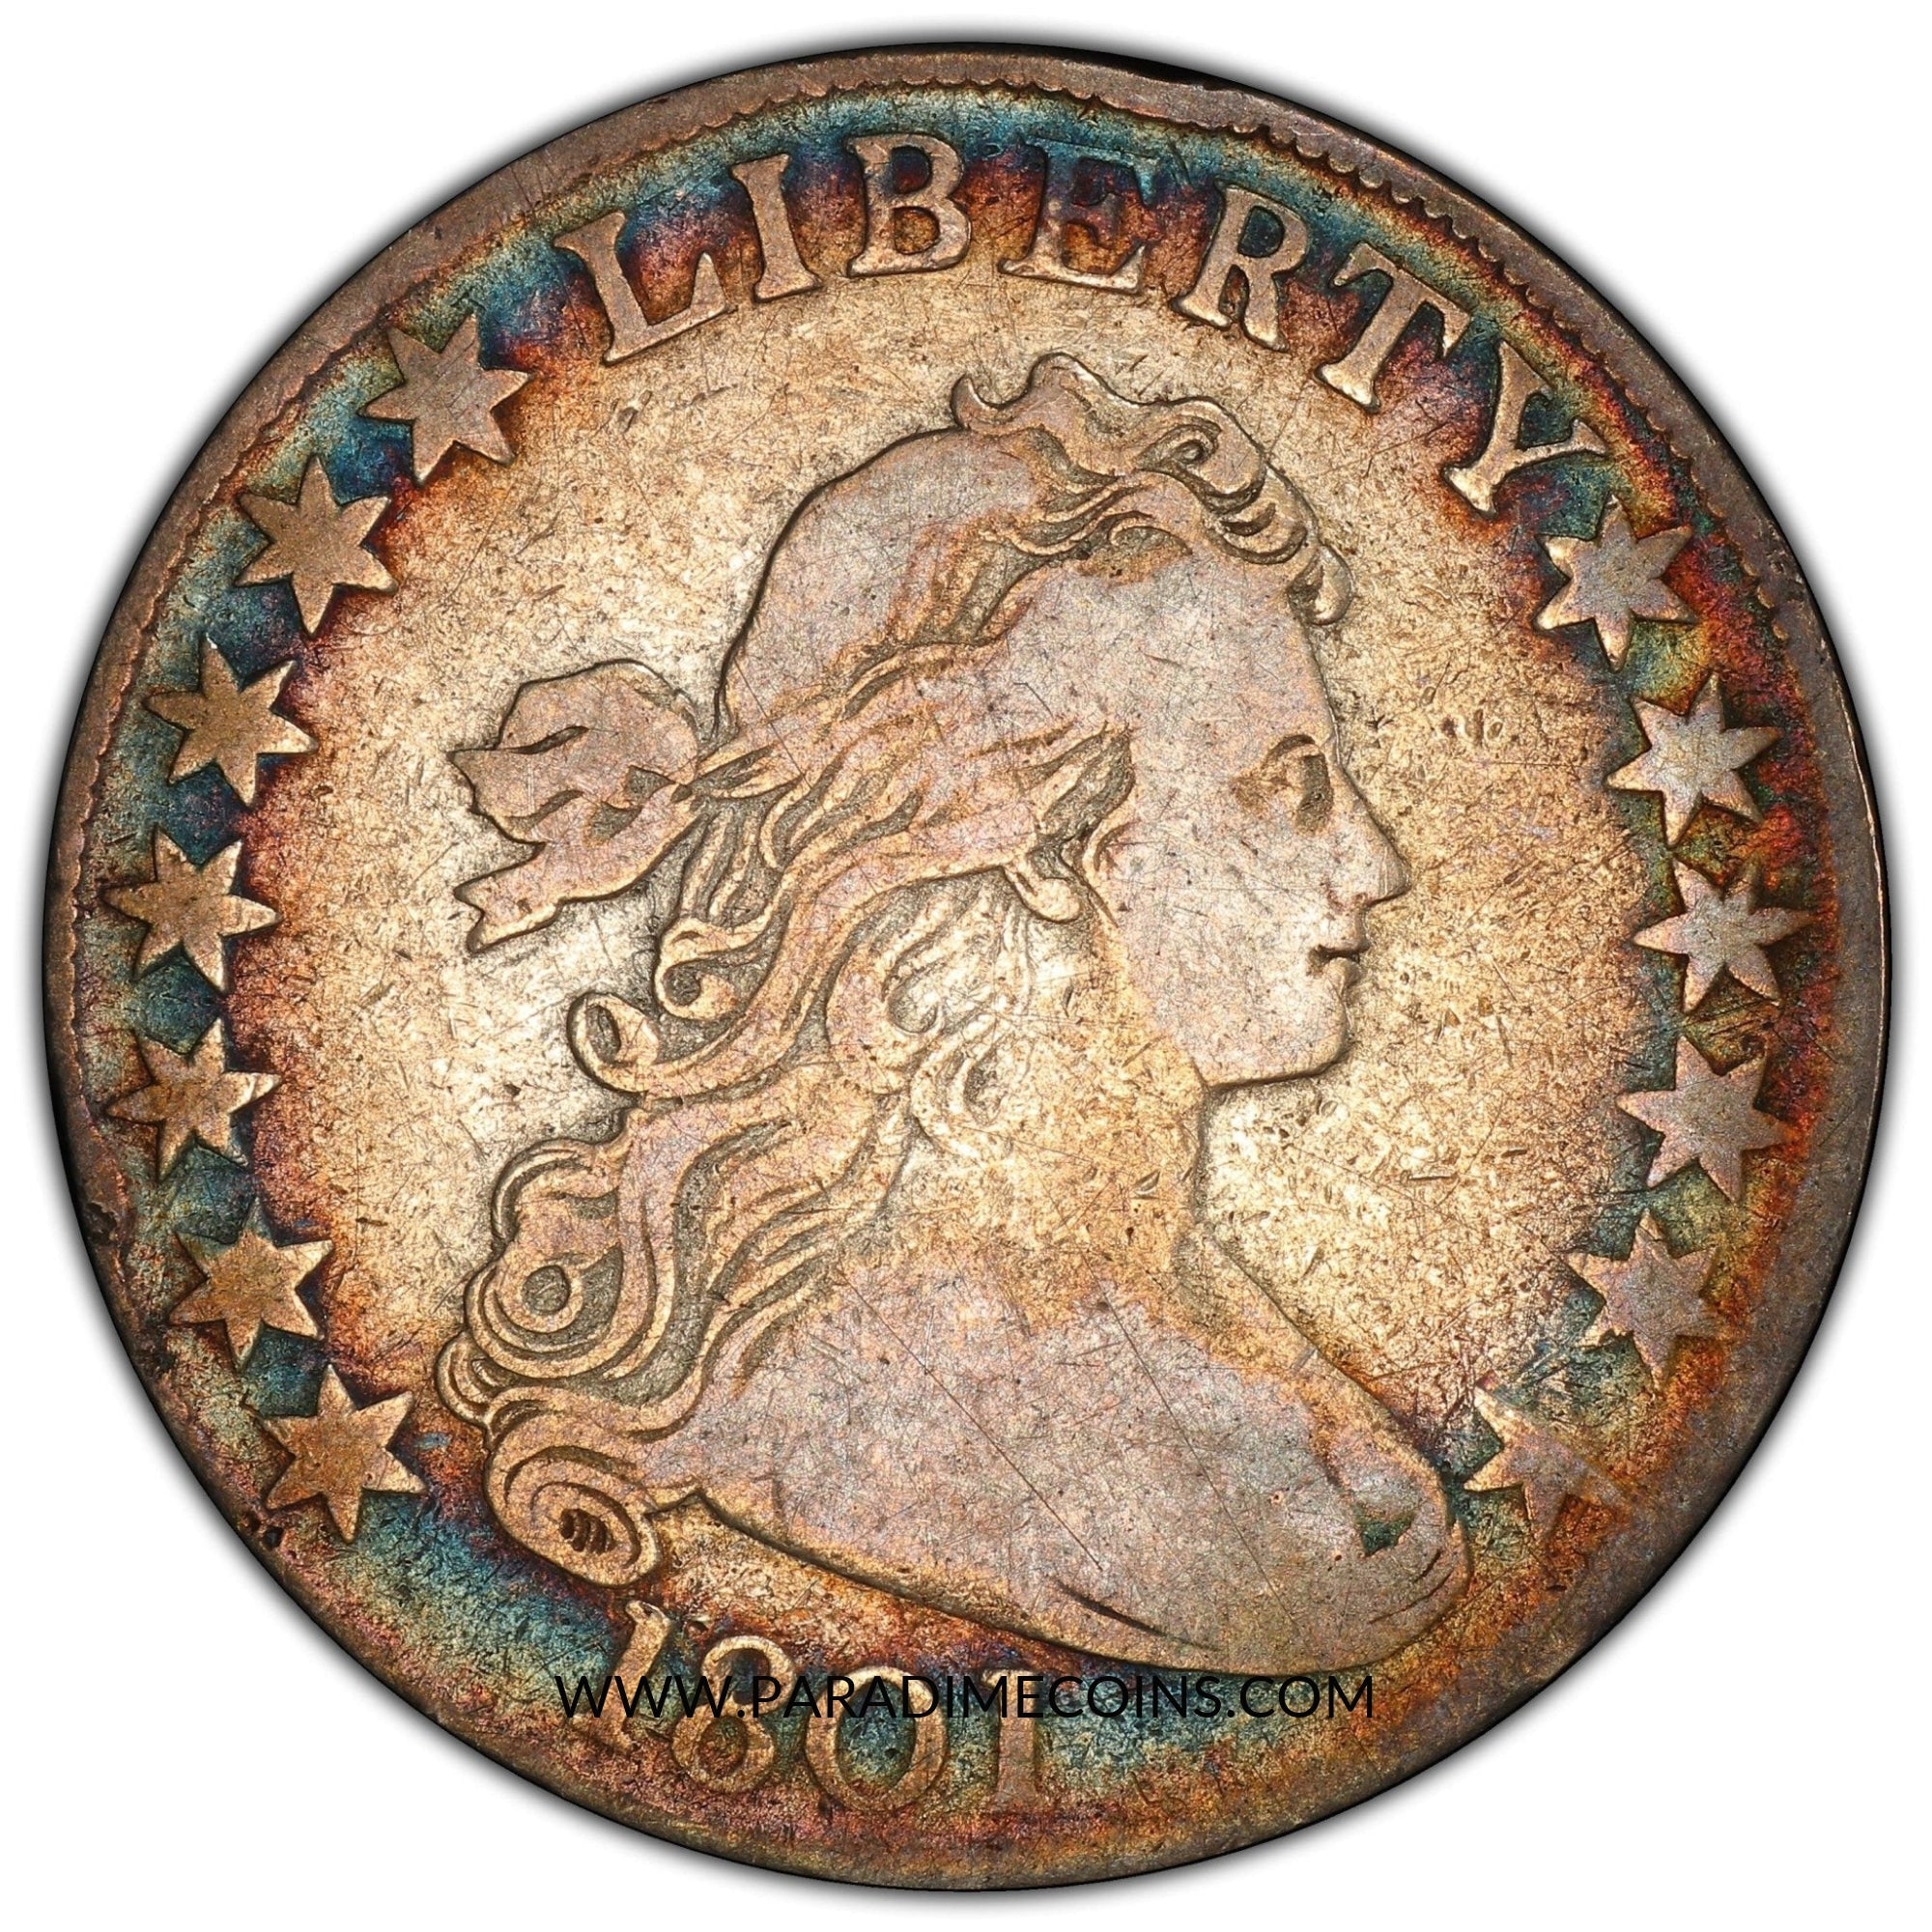 1801 50C F12 PCGS - Paradime Coins | PCGS NGC CACG CAC Rare US Numismatic Coins For Sale